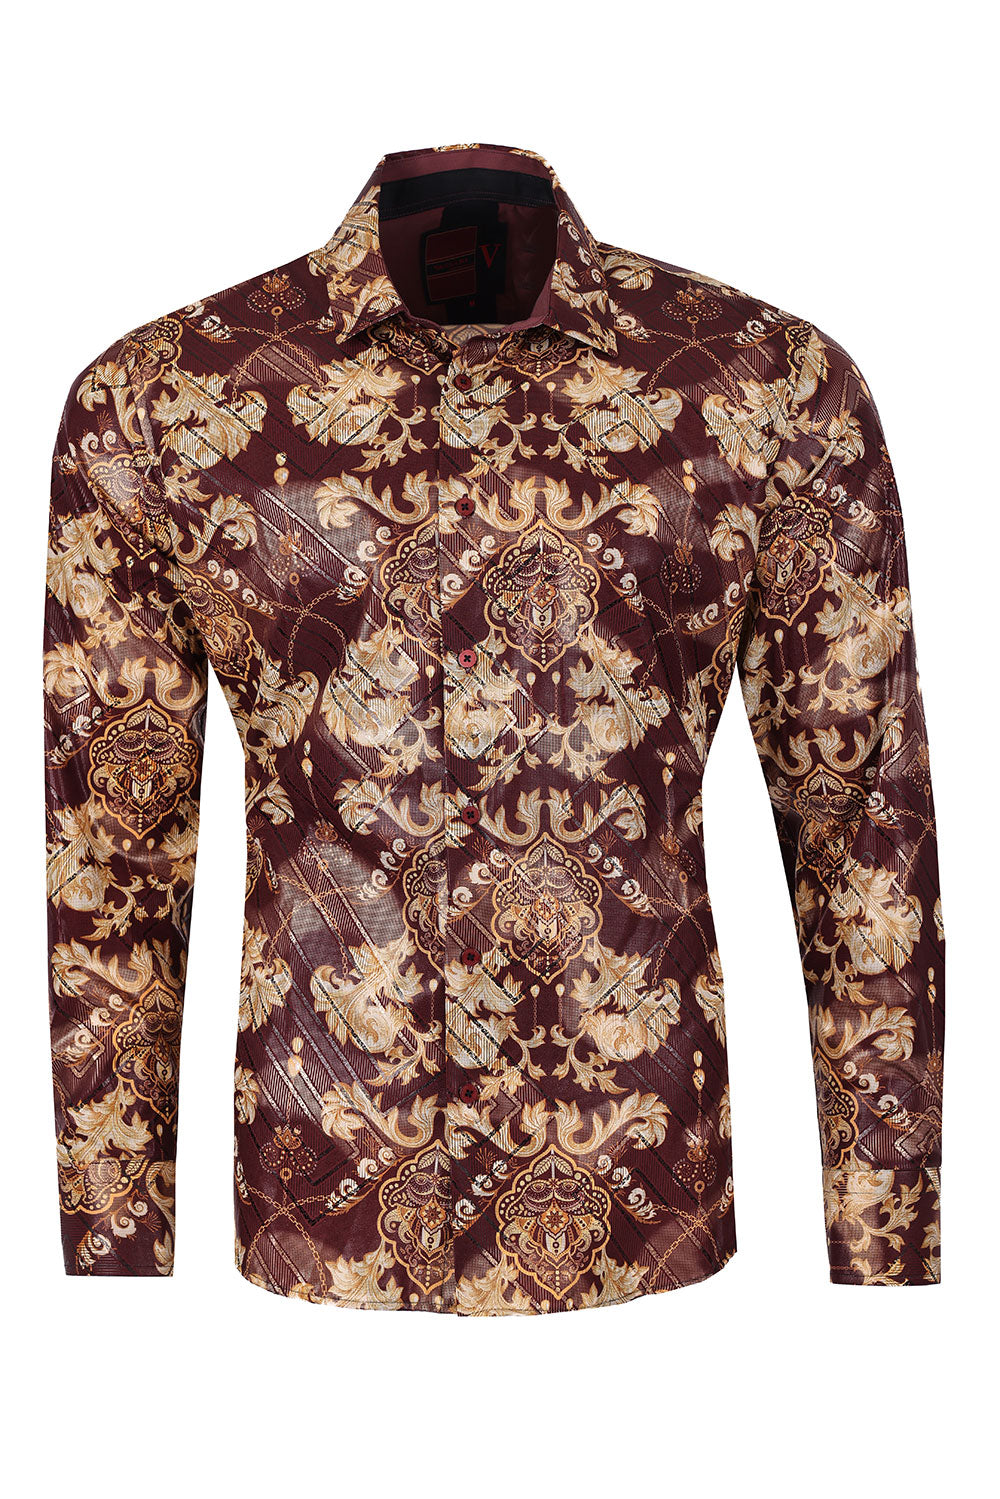 Vassari Mens Baroque Print Design Button Down Luxury Shirt  2VS158 Wine and Gold